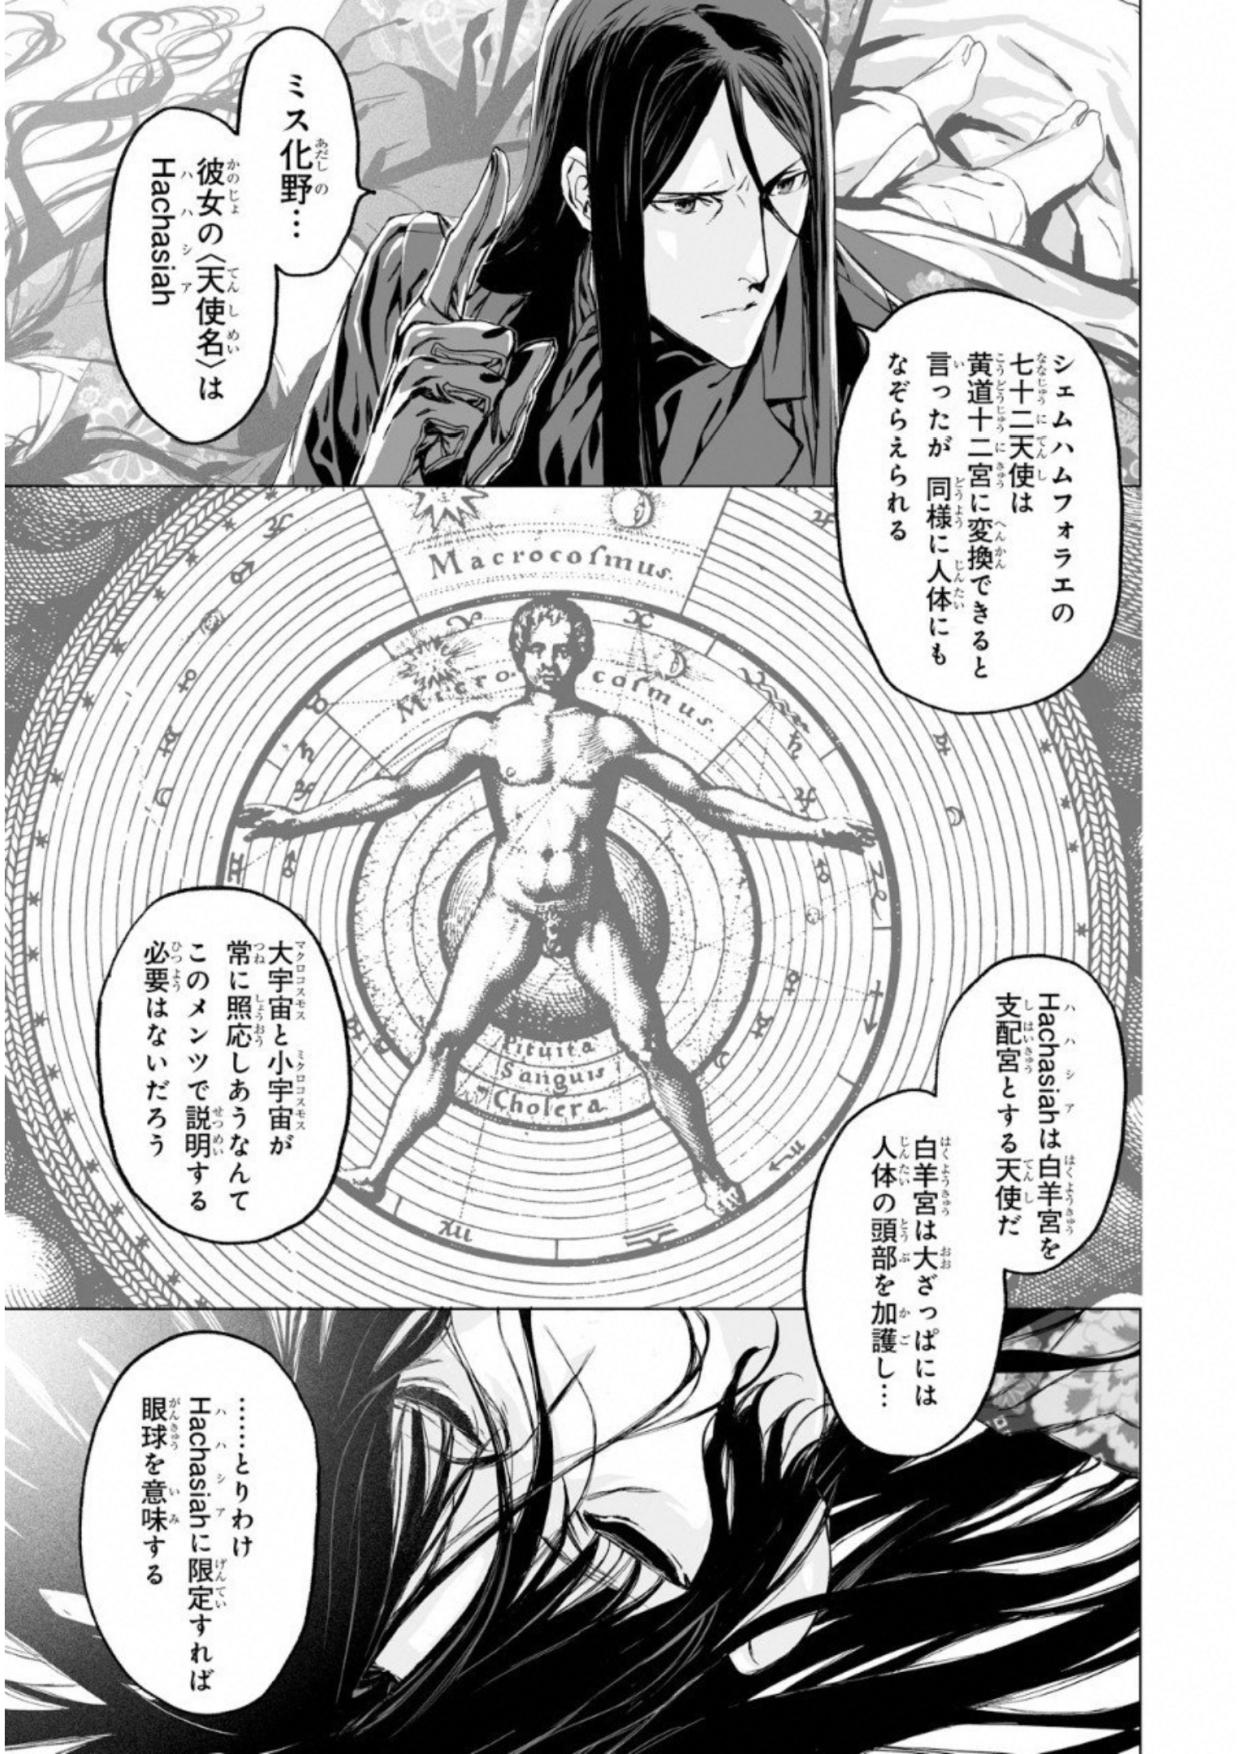 Lord El-Melloi II-sei no Jikenbo - Chapter 5 - Page 1